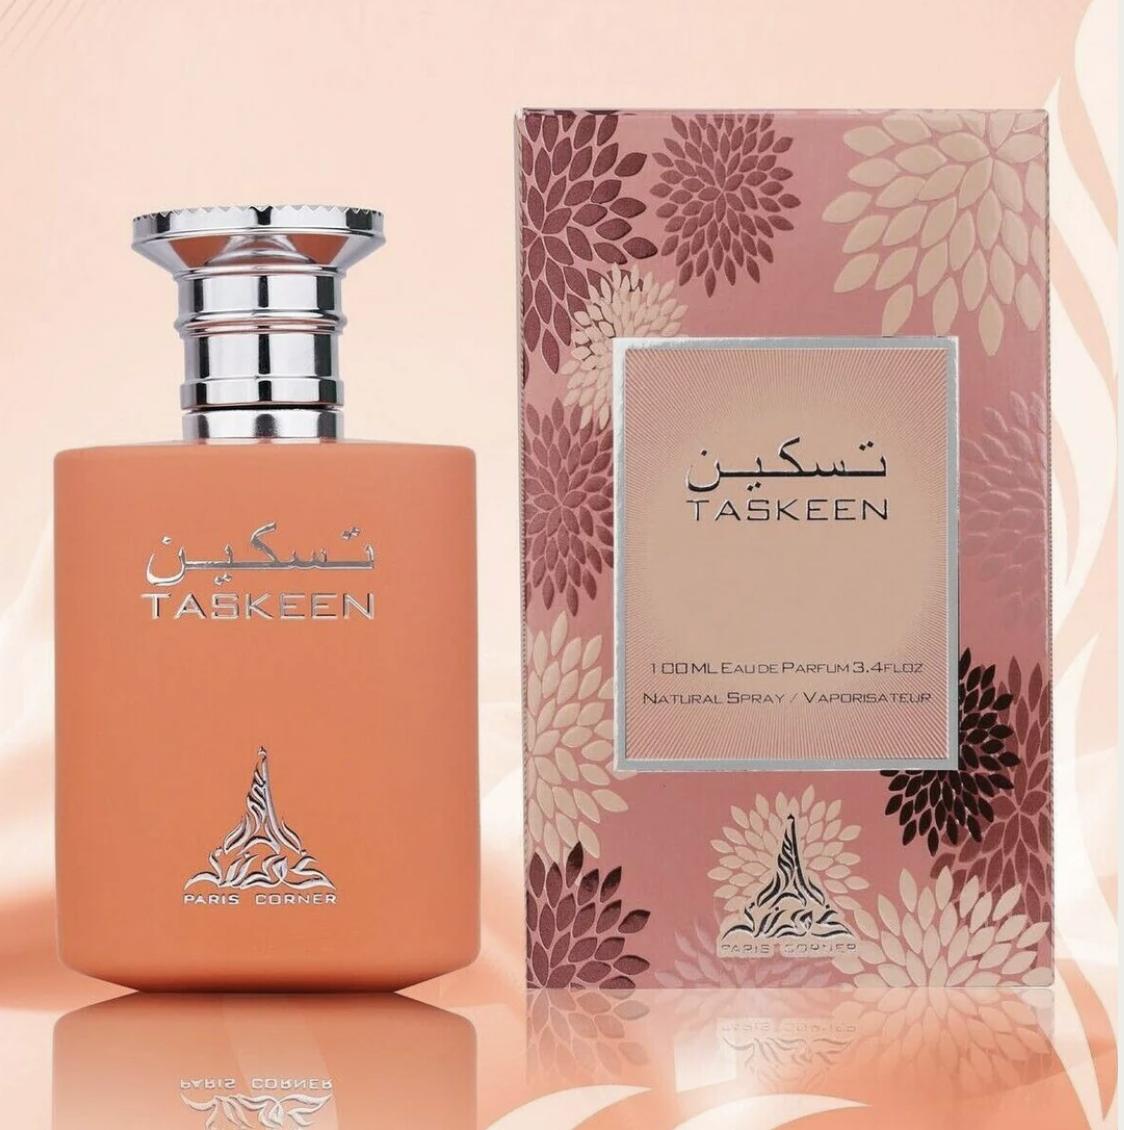 Hareem Sultan Silver Perfume Oil and TASKEEN Peach Tea Perfume - Combo Set